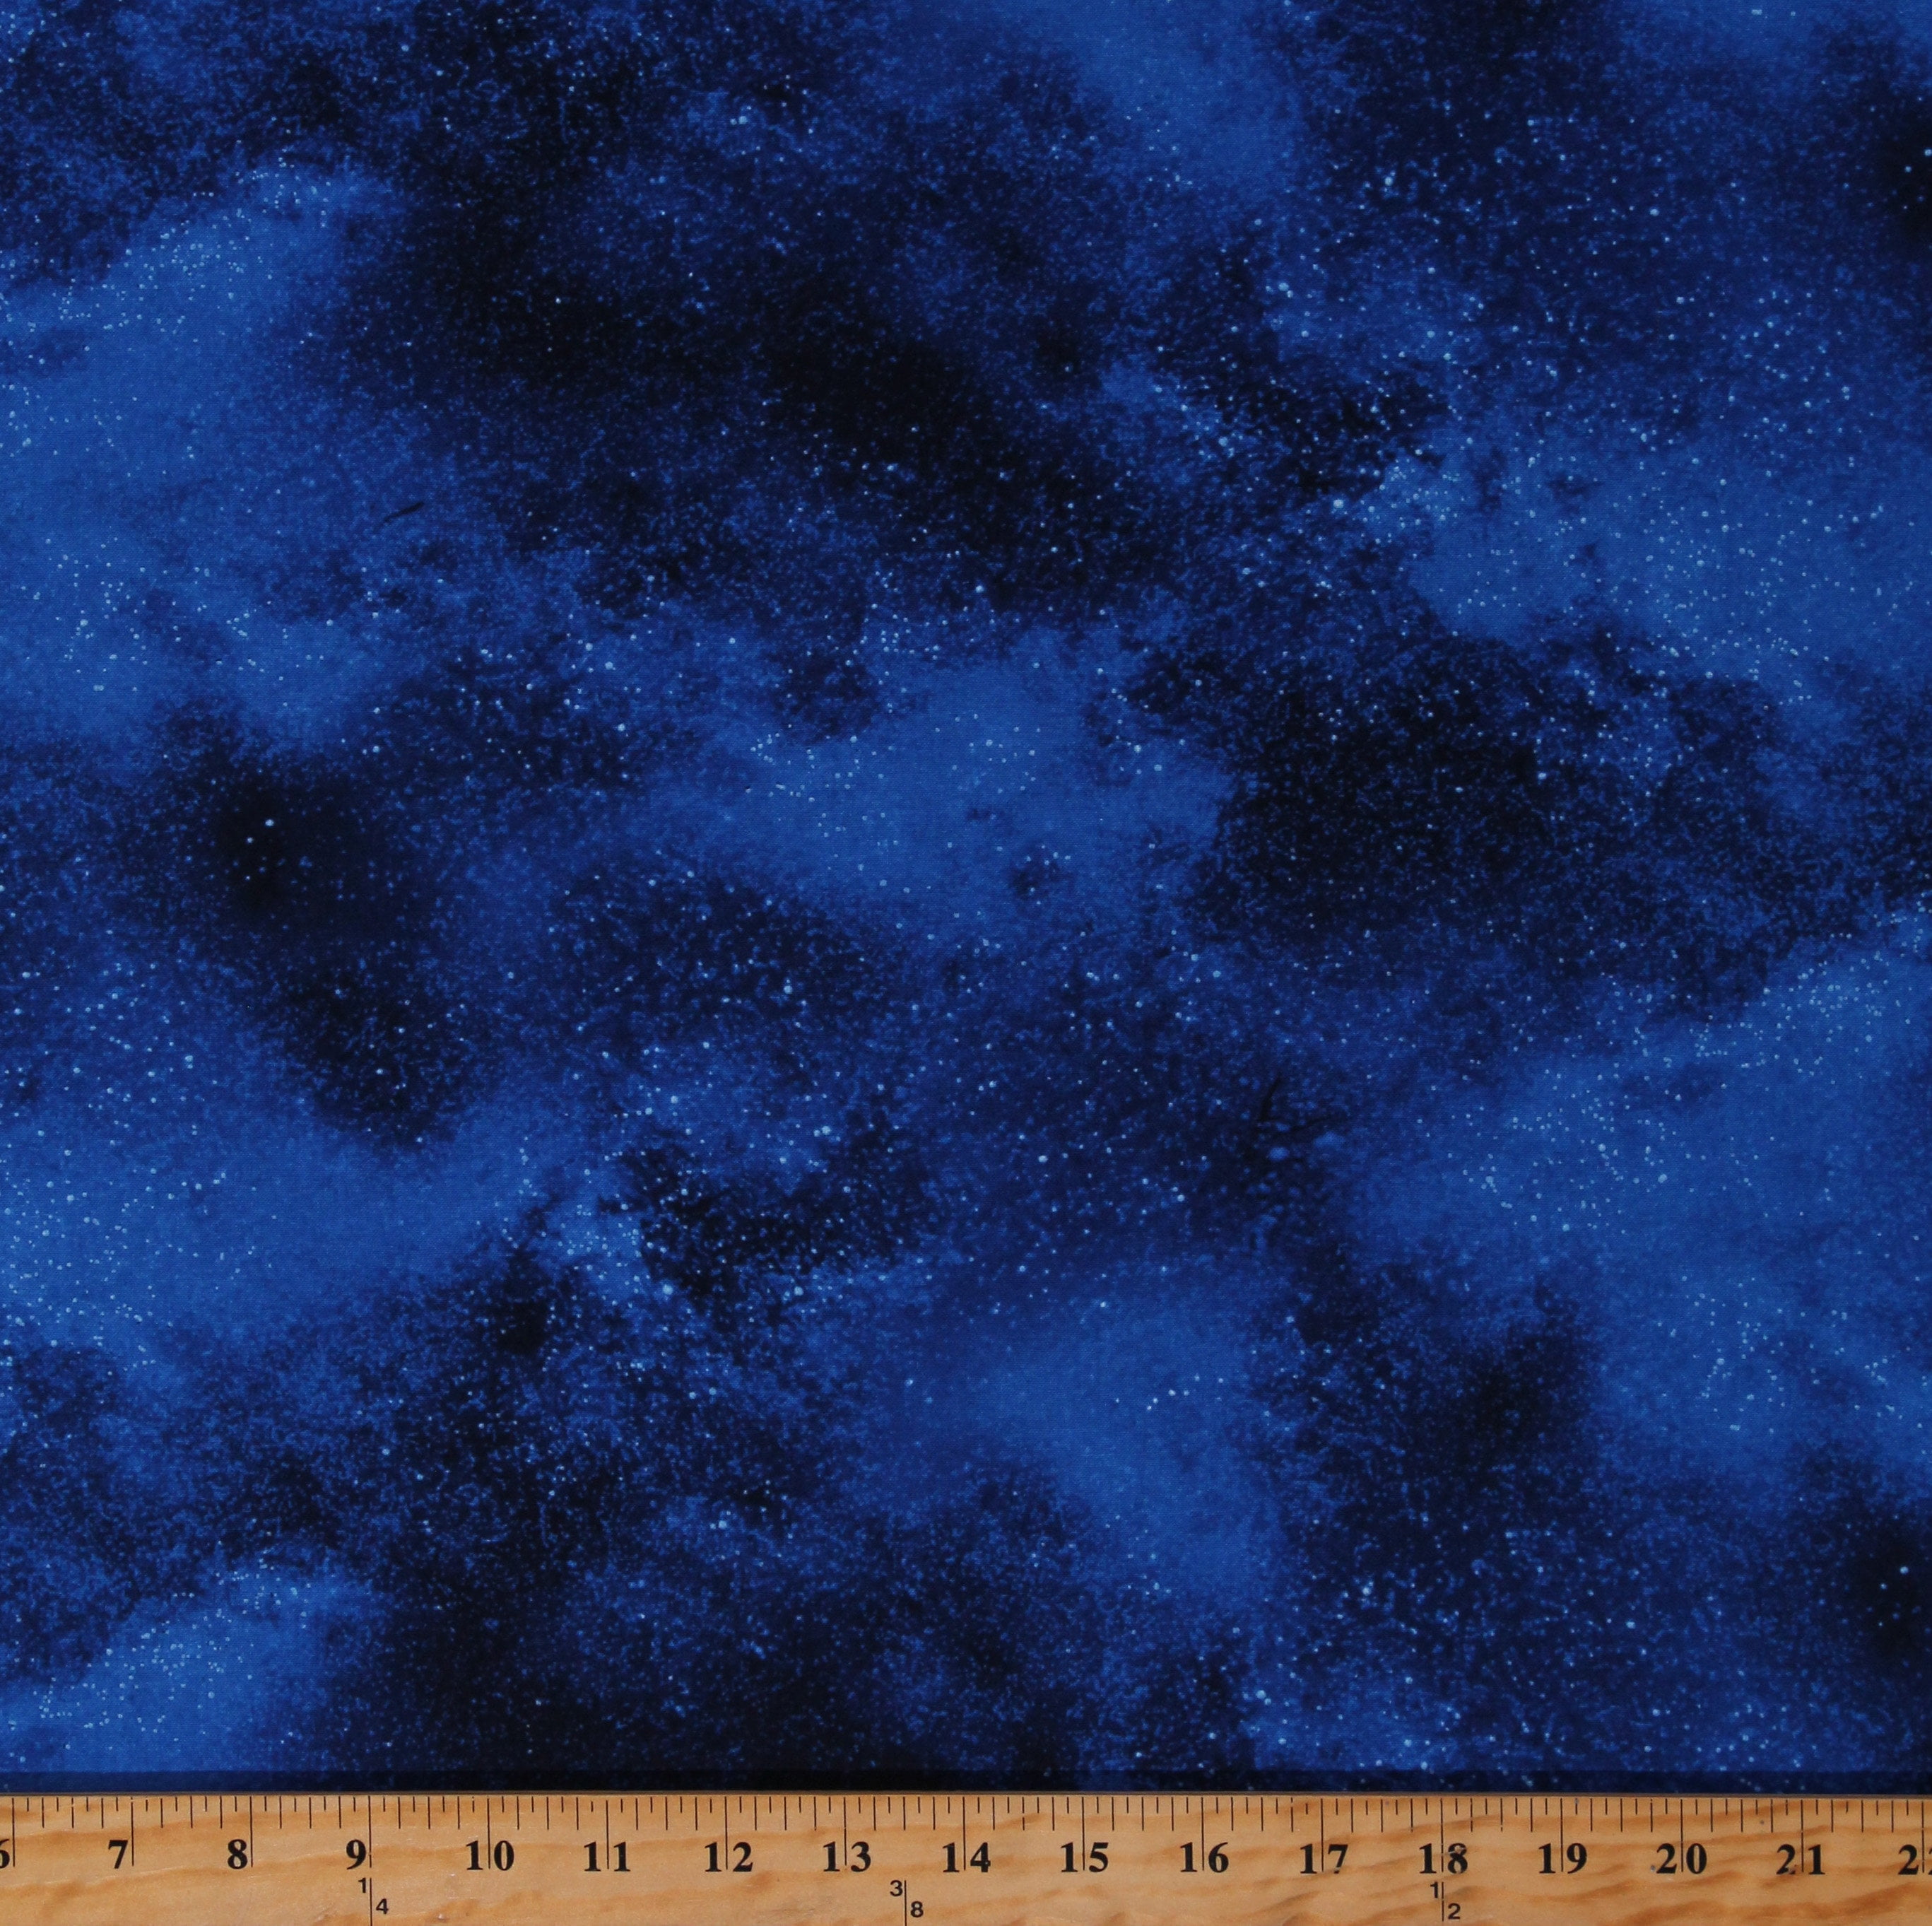 Width 5339 Star Night Sky Space Cotton Fabric 55 Inch x 12 Yard Length